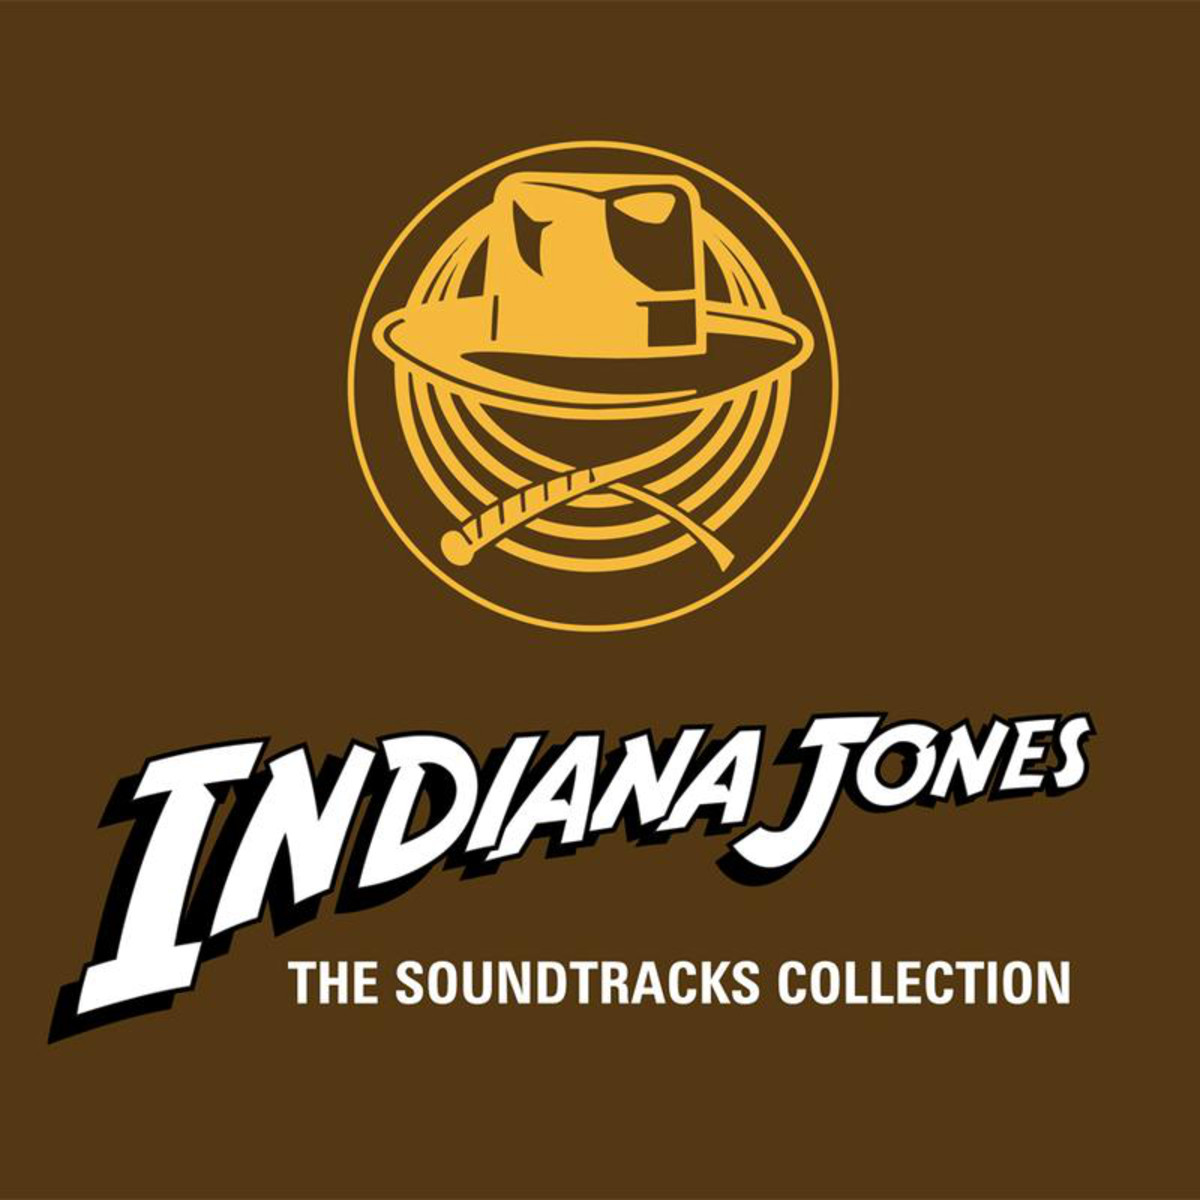 Indiana Jones collection soundtrack